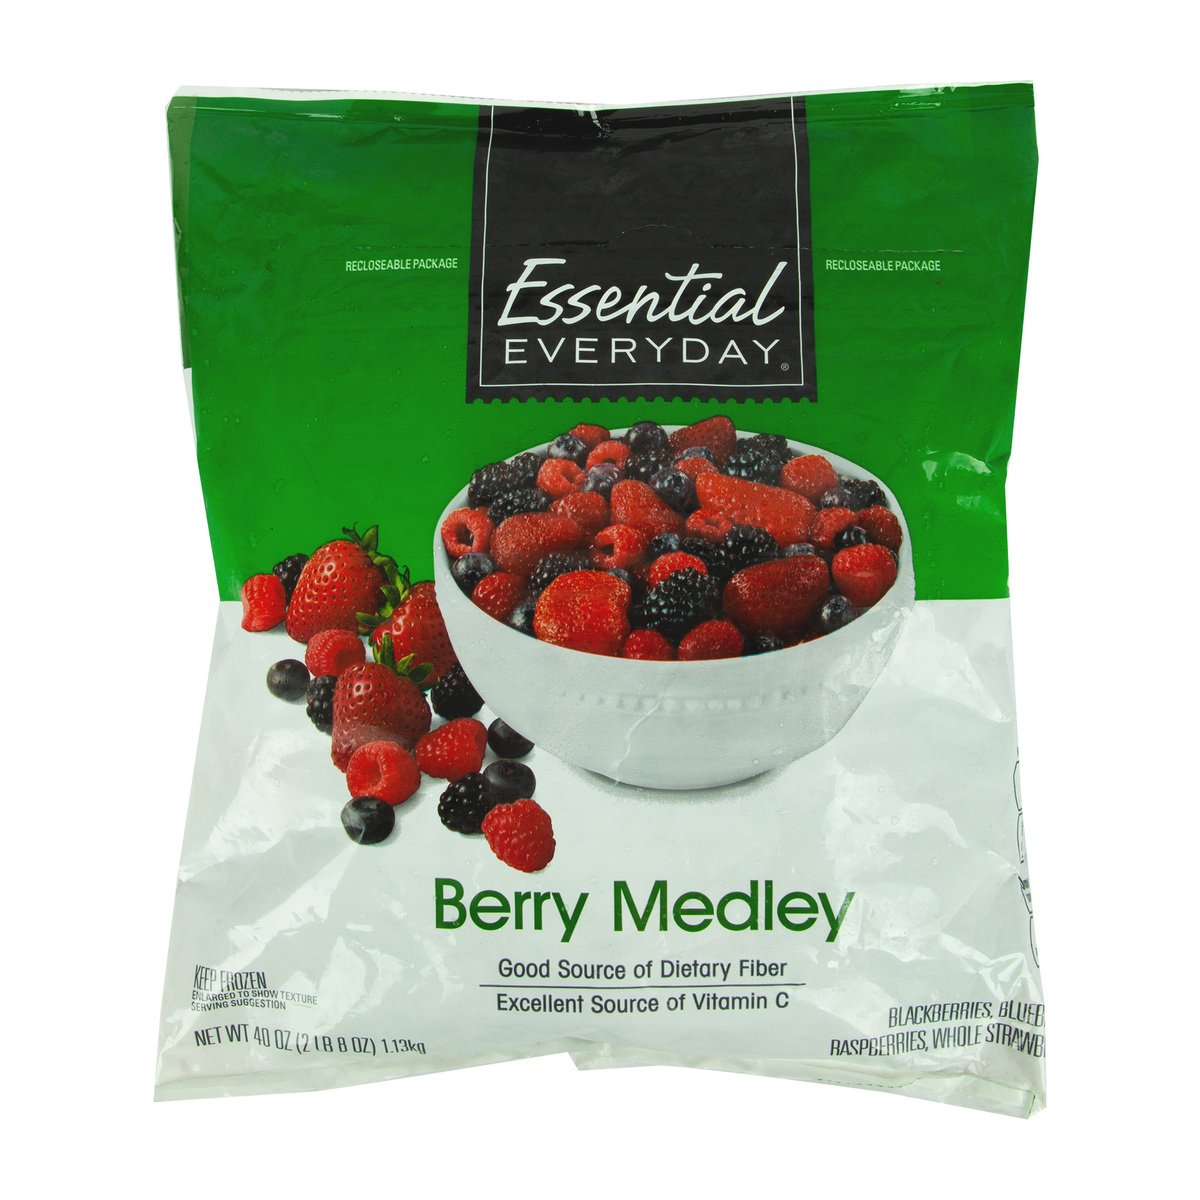 Essential Everyday Frozen Berry Medley 1.13 kg